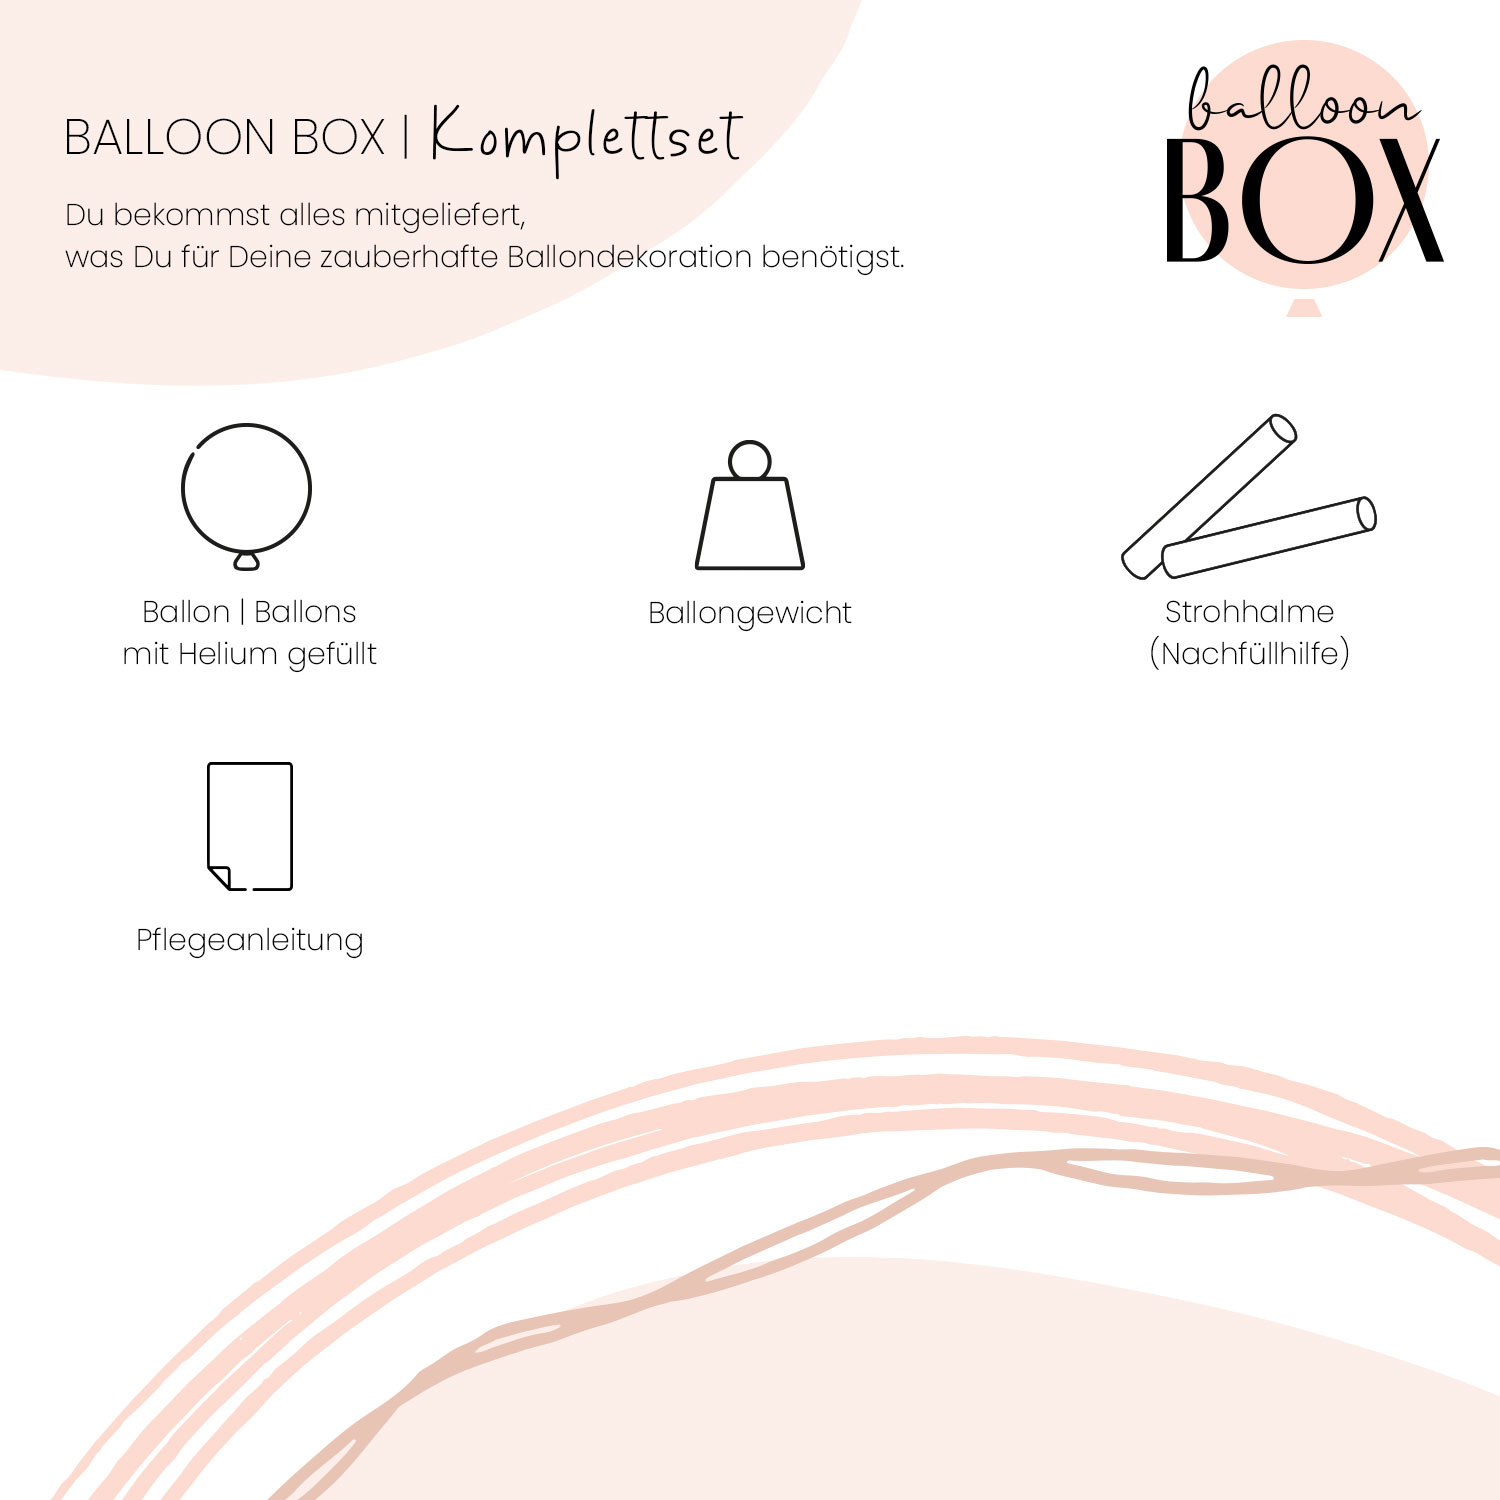 Heliumballon in a Box - Konfirmation Eucalyptus